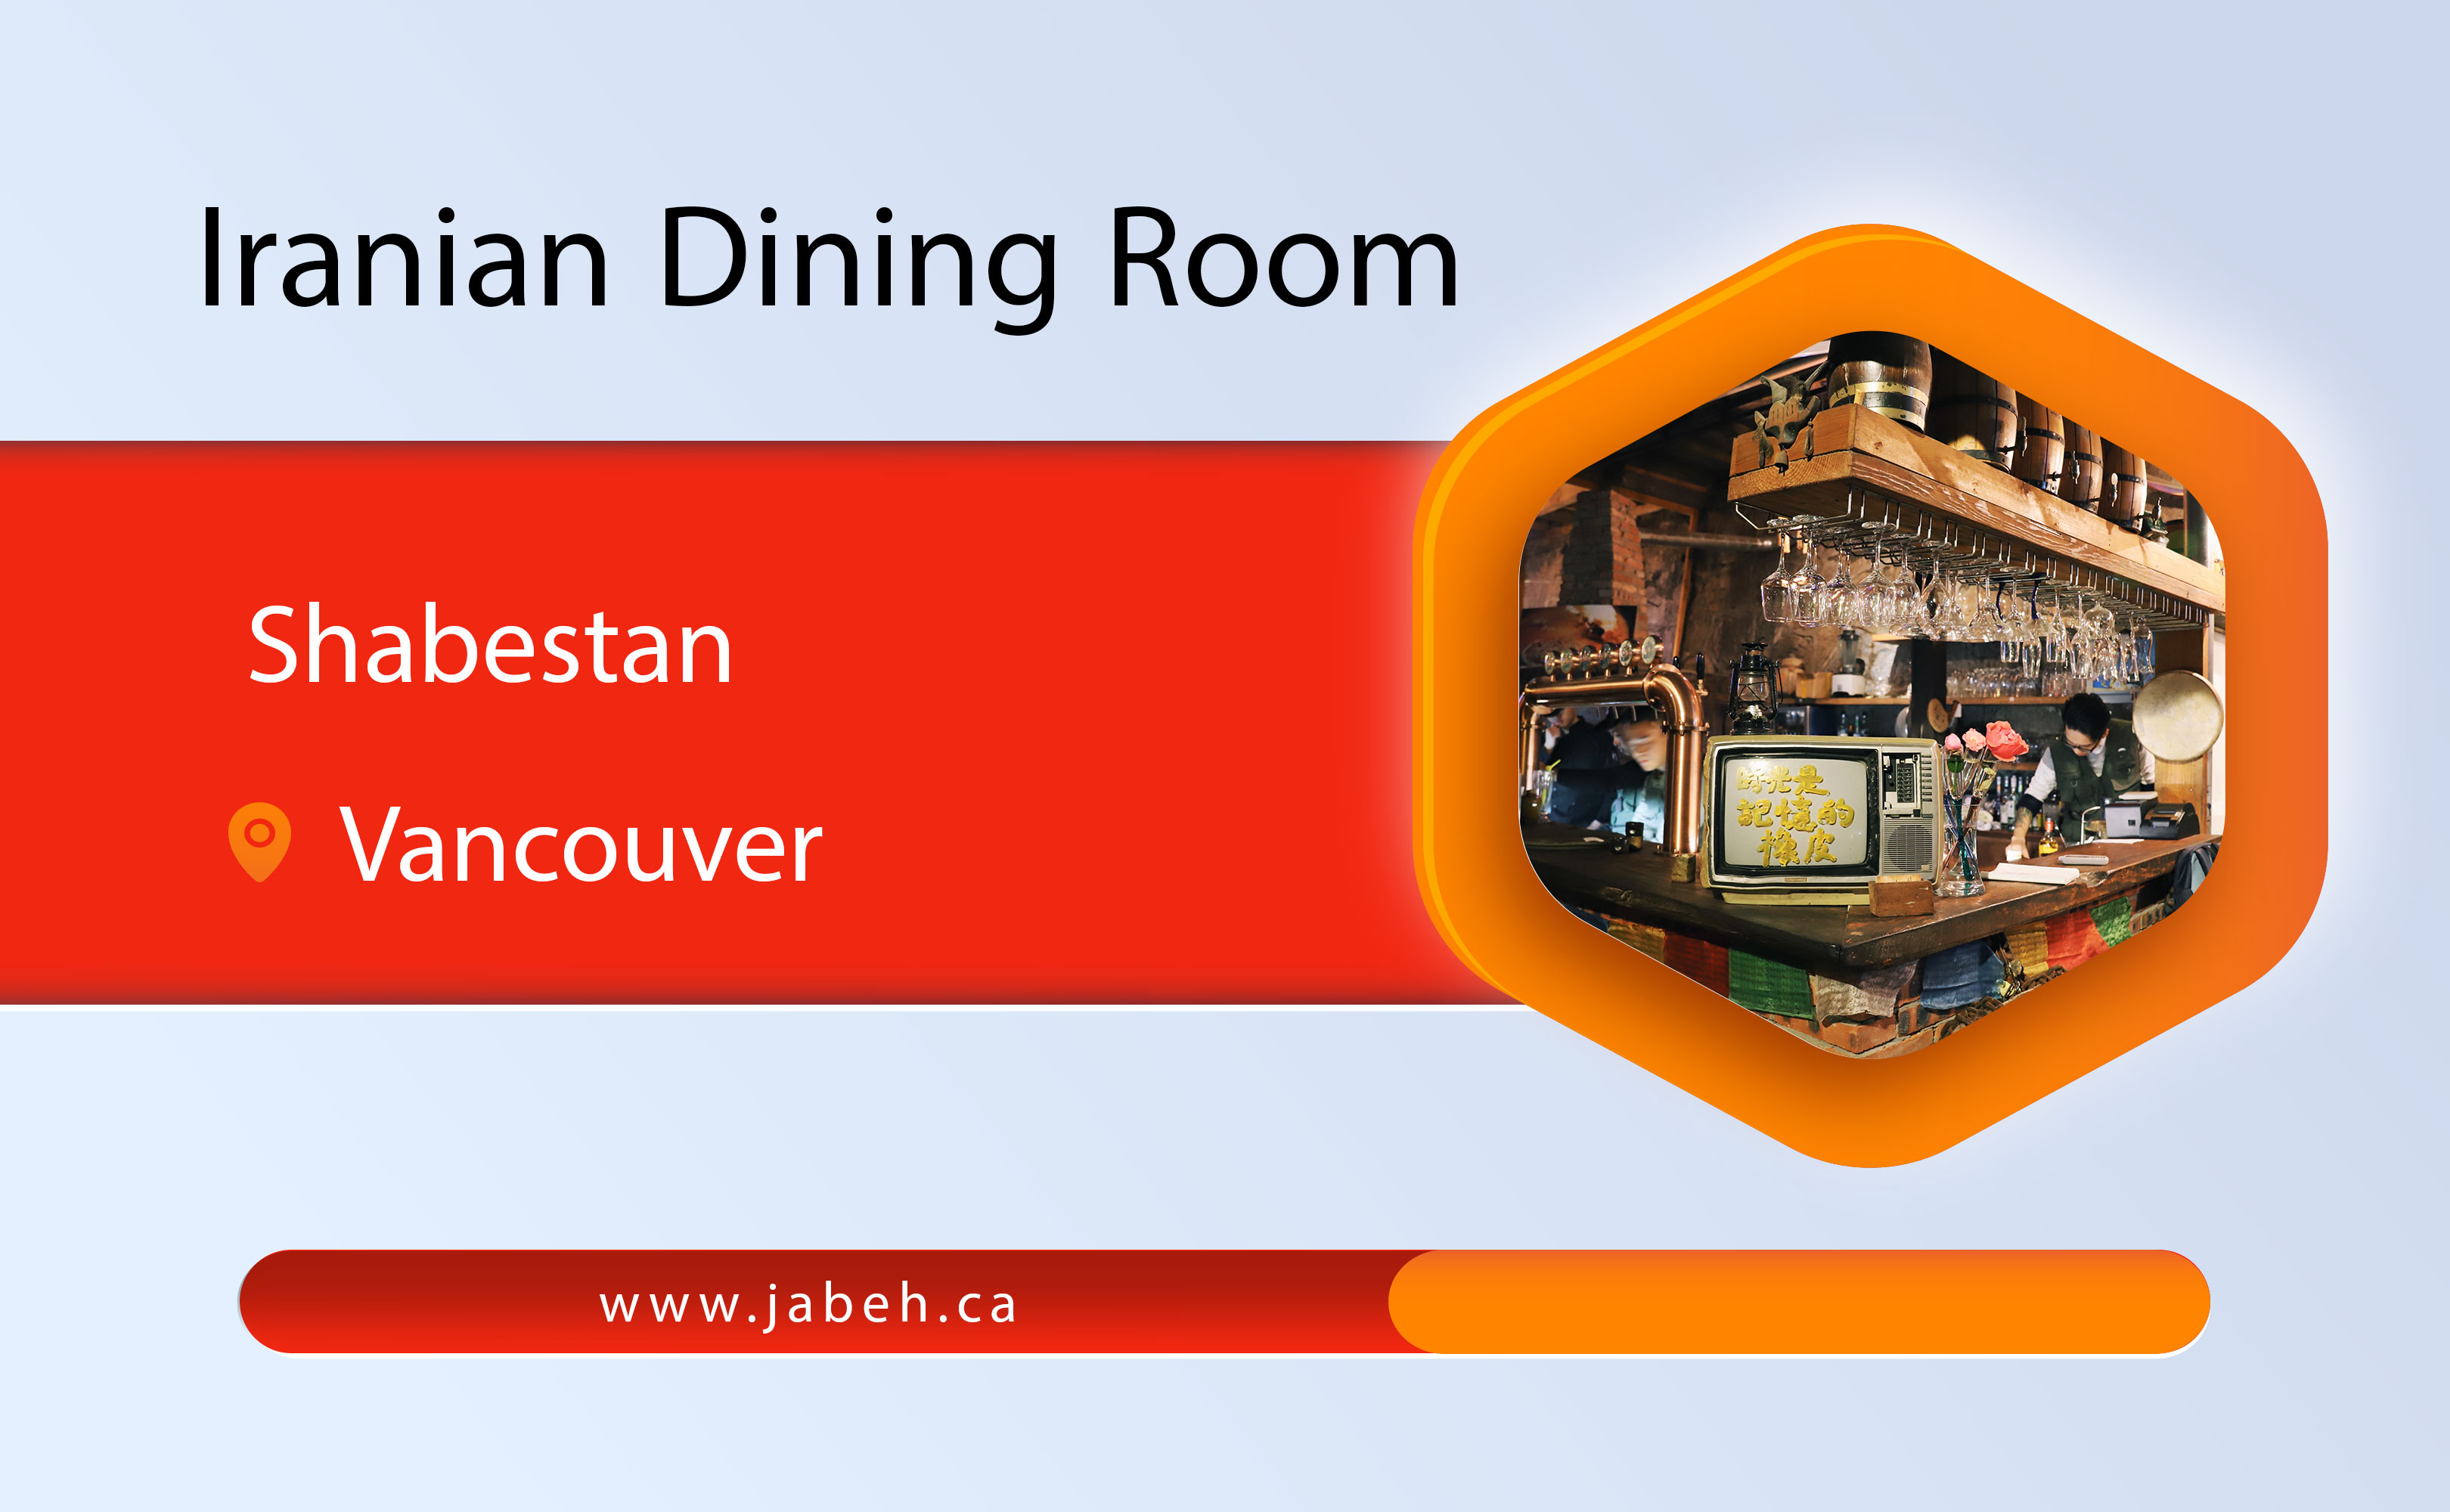 Shabestan Persian dining room in Toronto